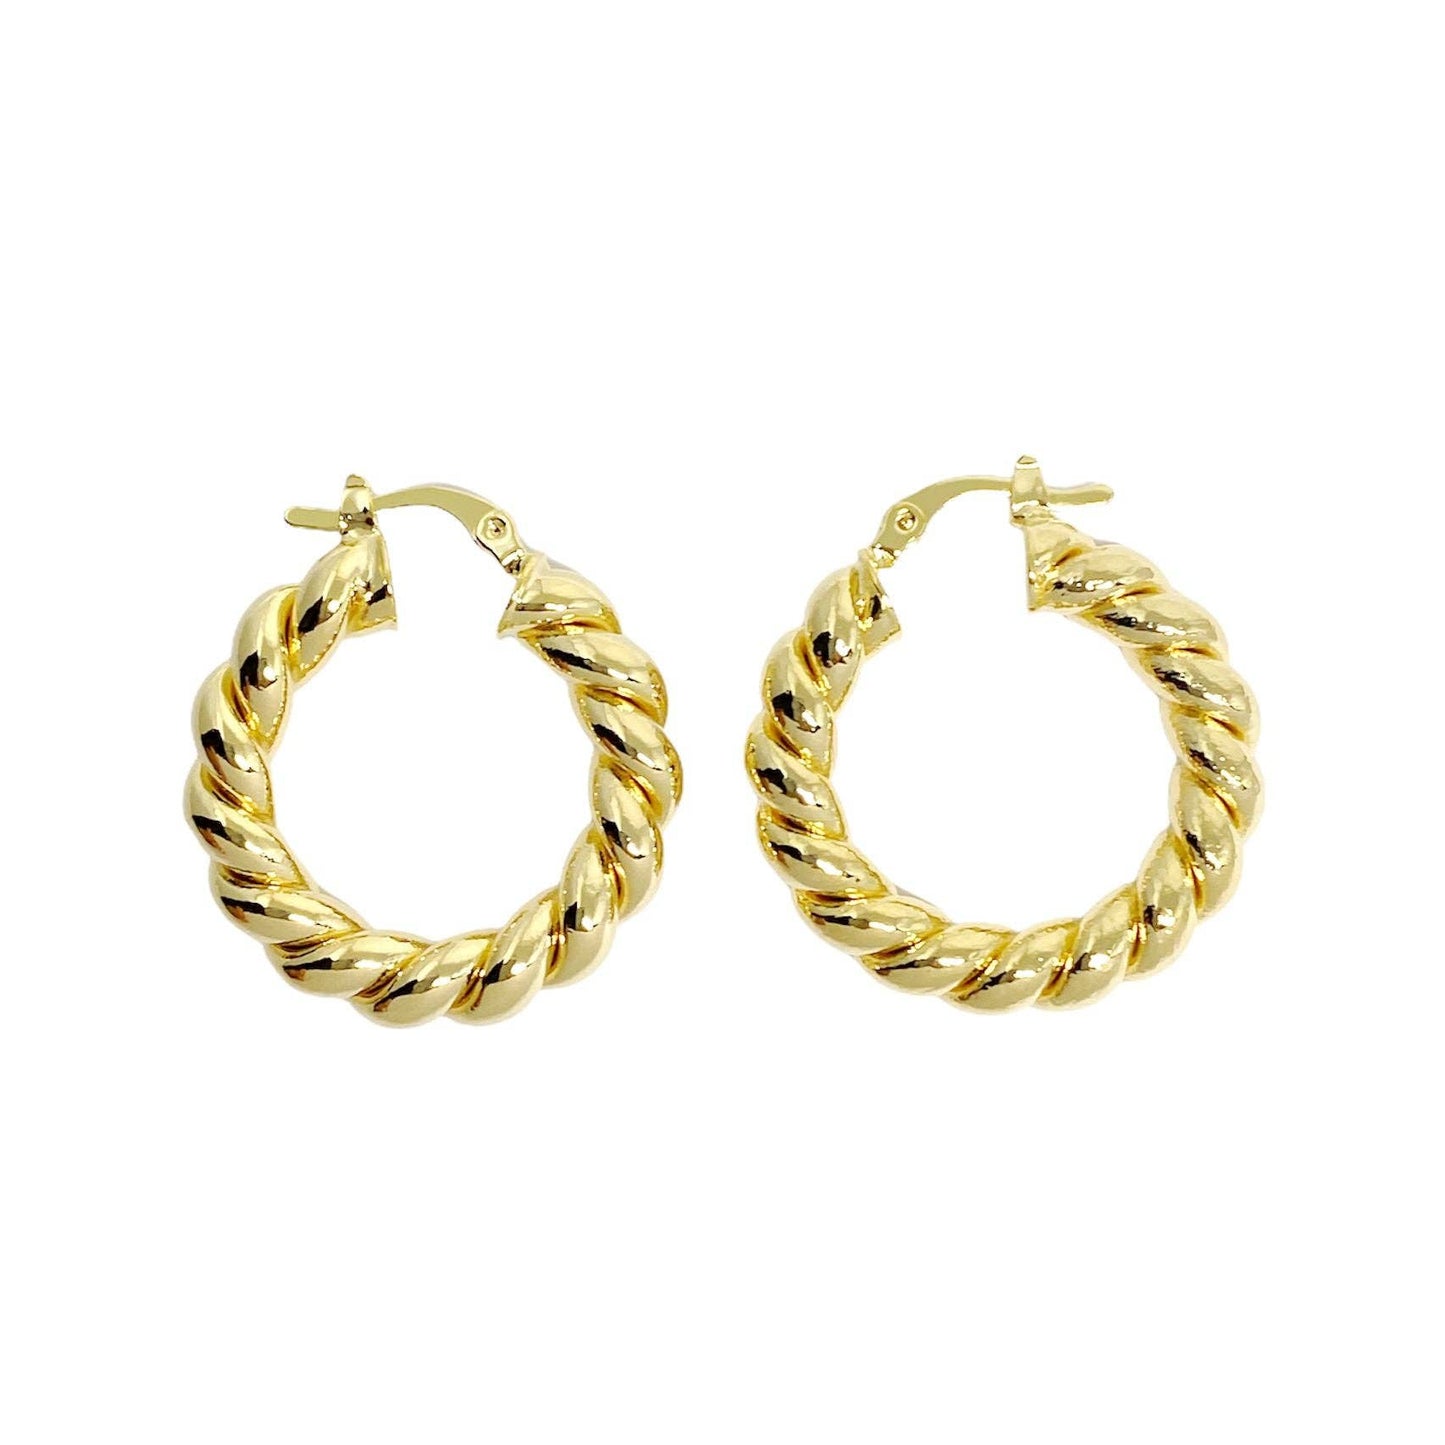 Jewelry, Gold Hoop Earrings, Hoops, 18k Filled